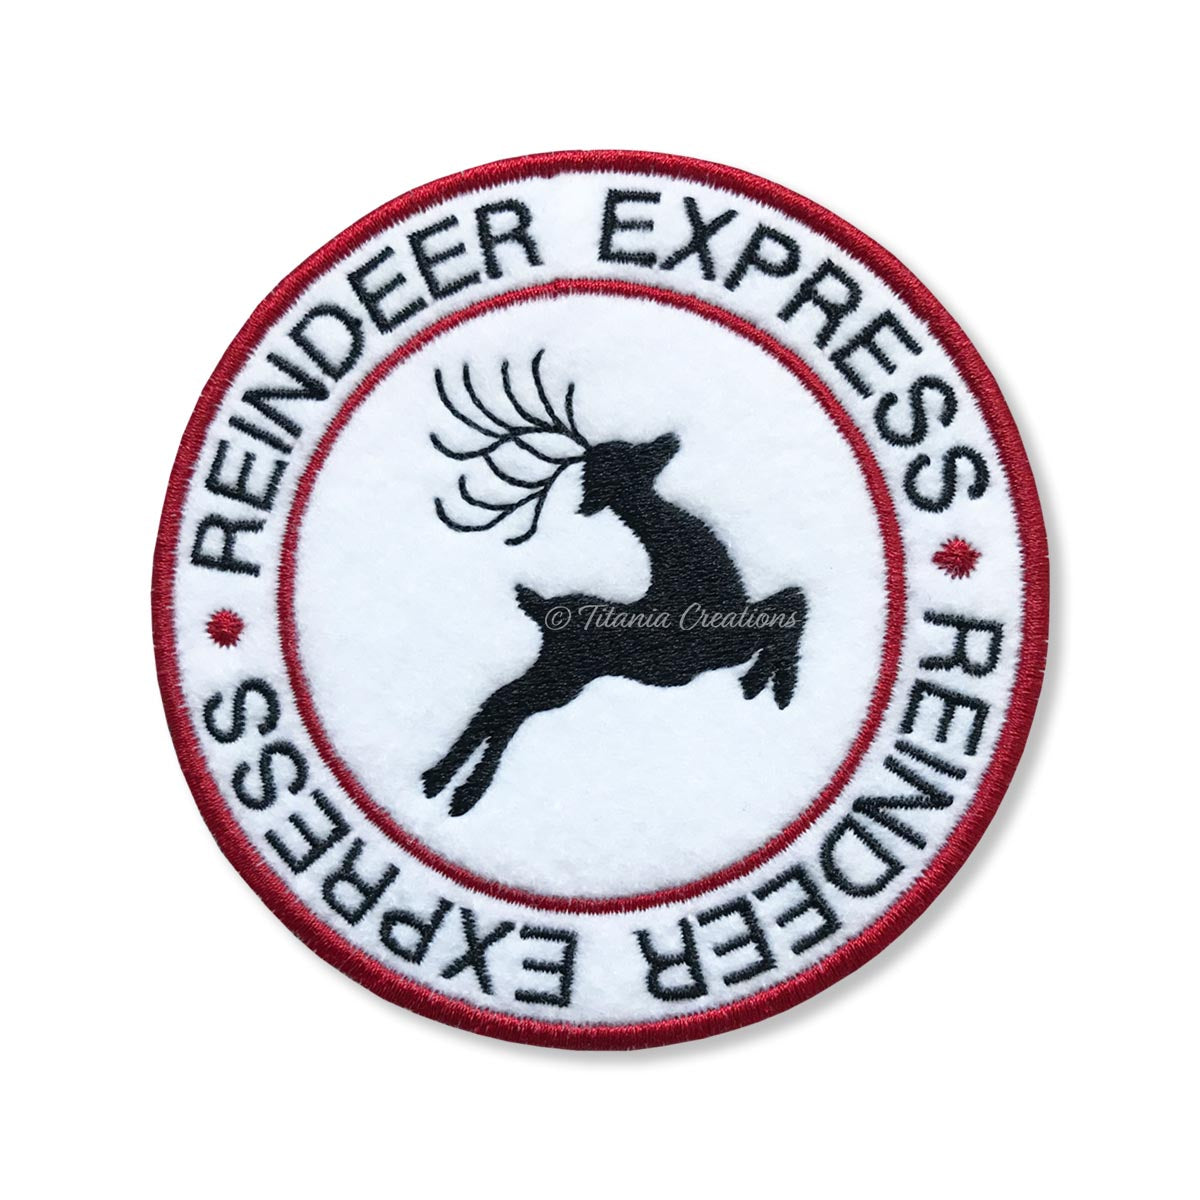 Reindeer Express Coaster 4x4